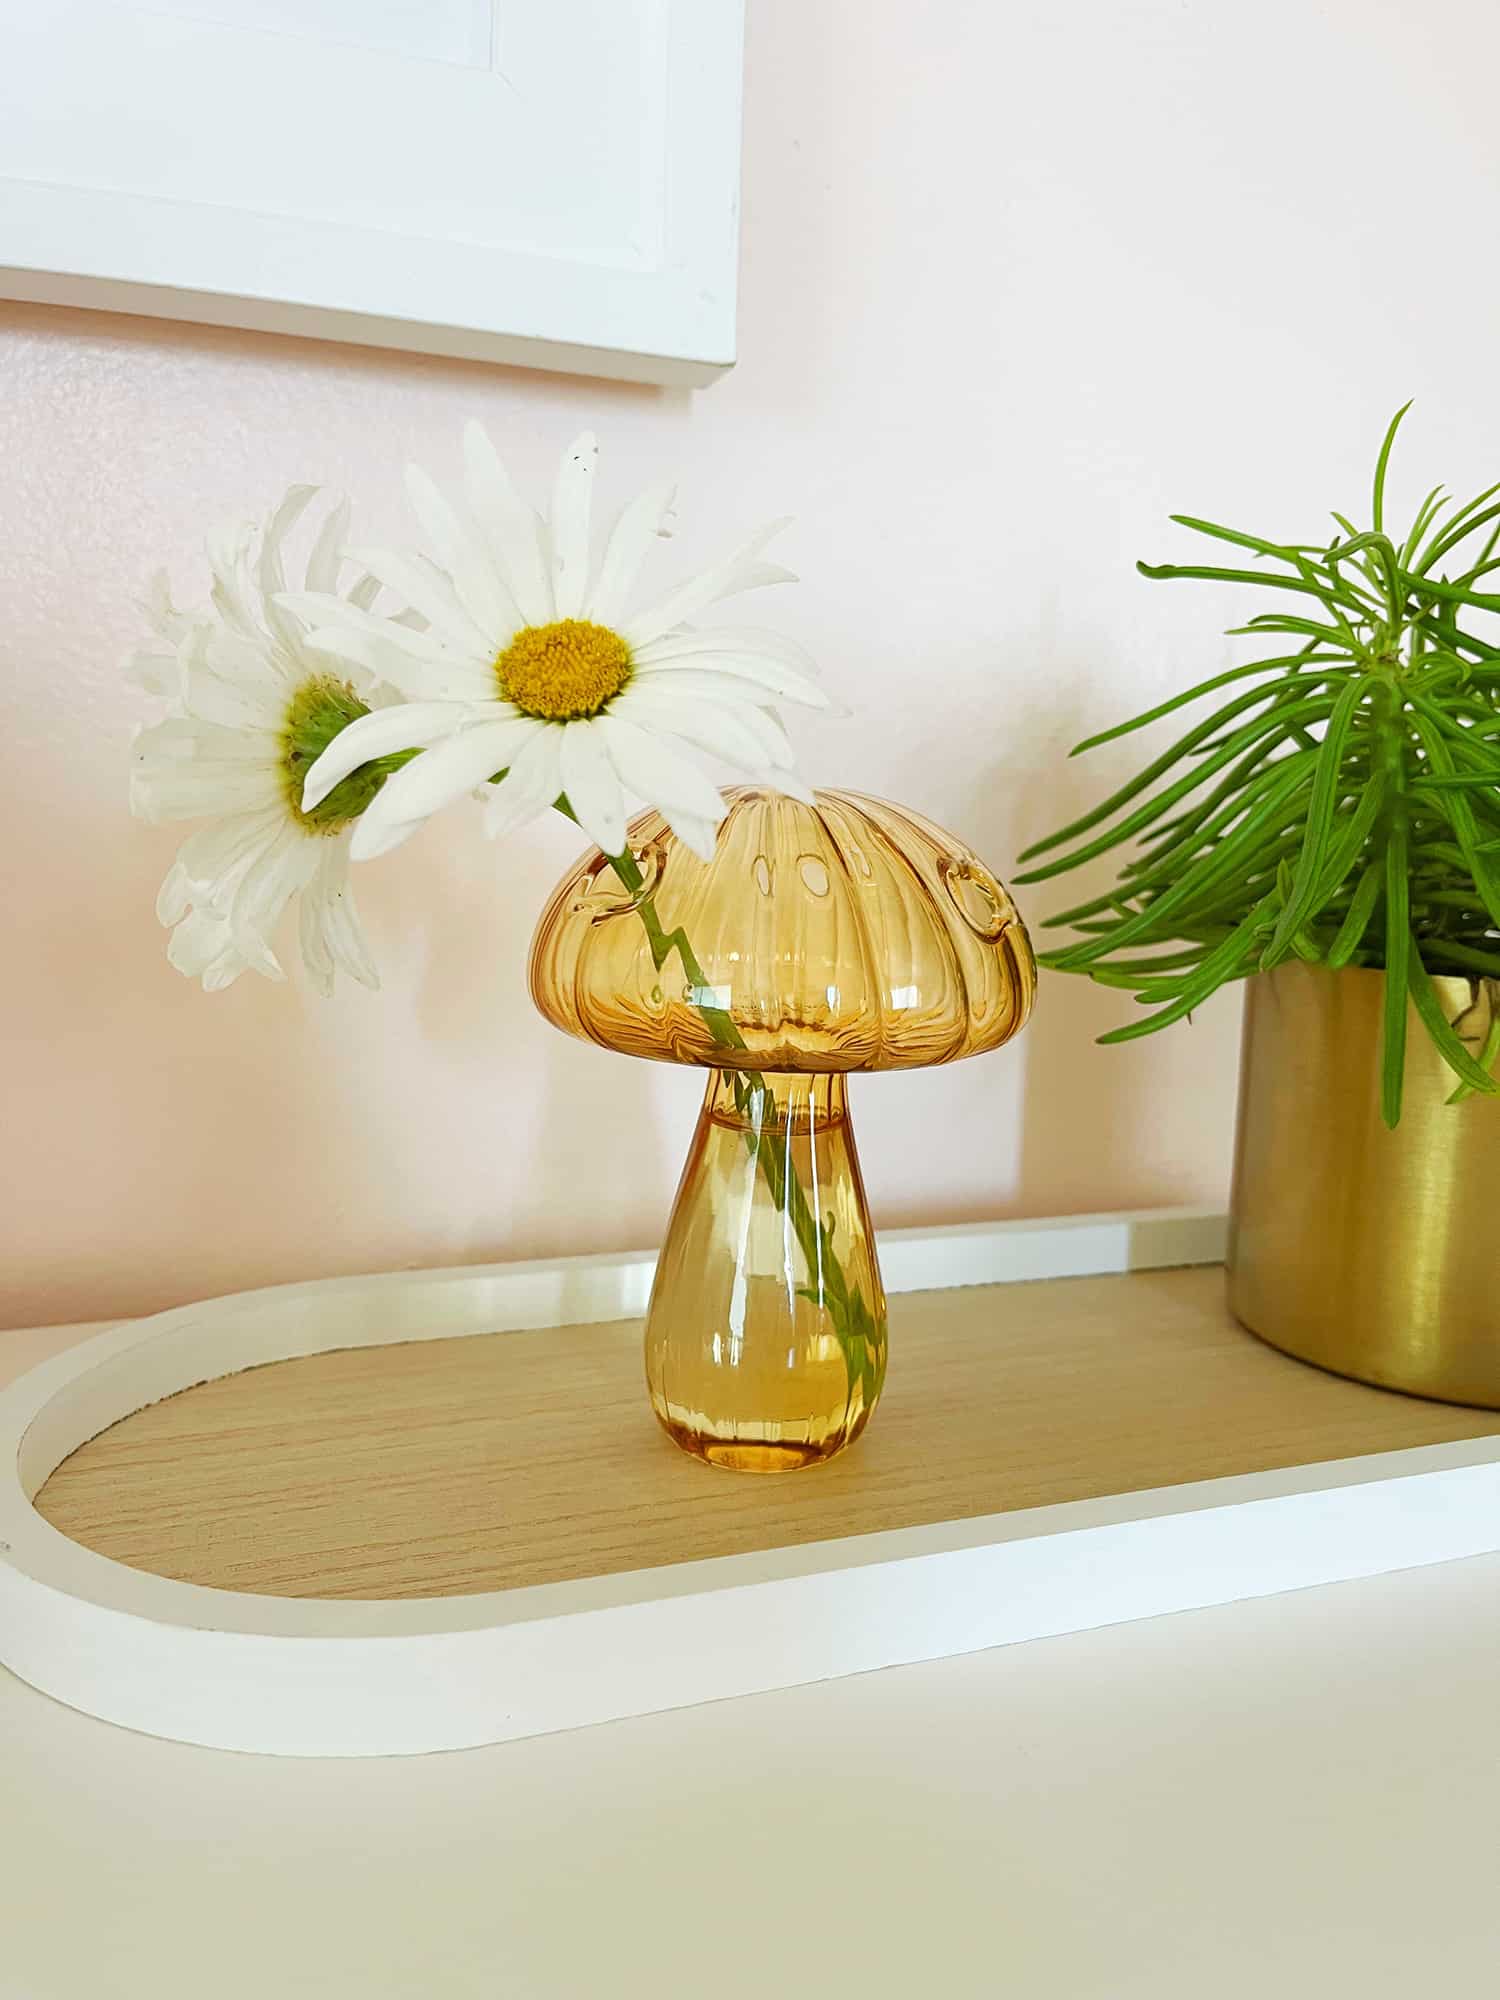 Mushroom glass vases with fresh flowers